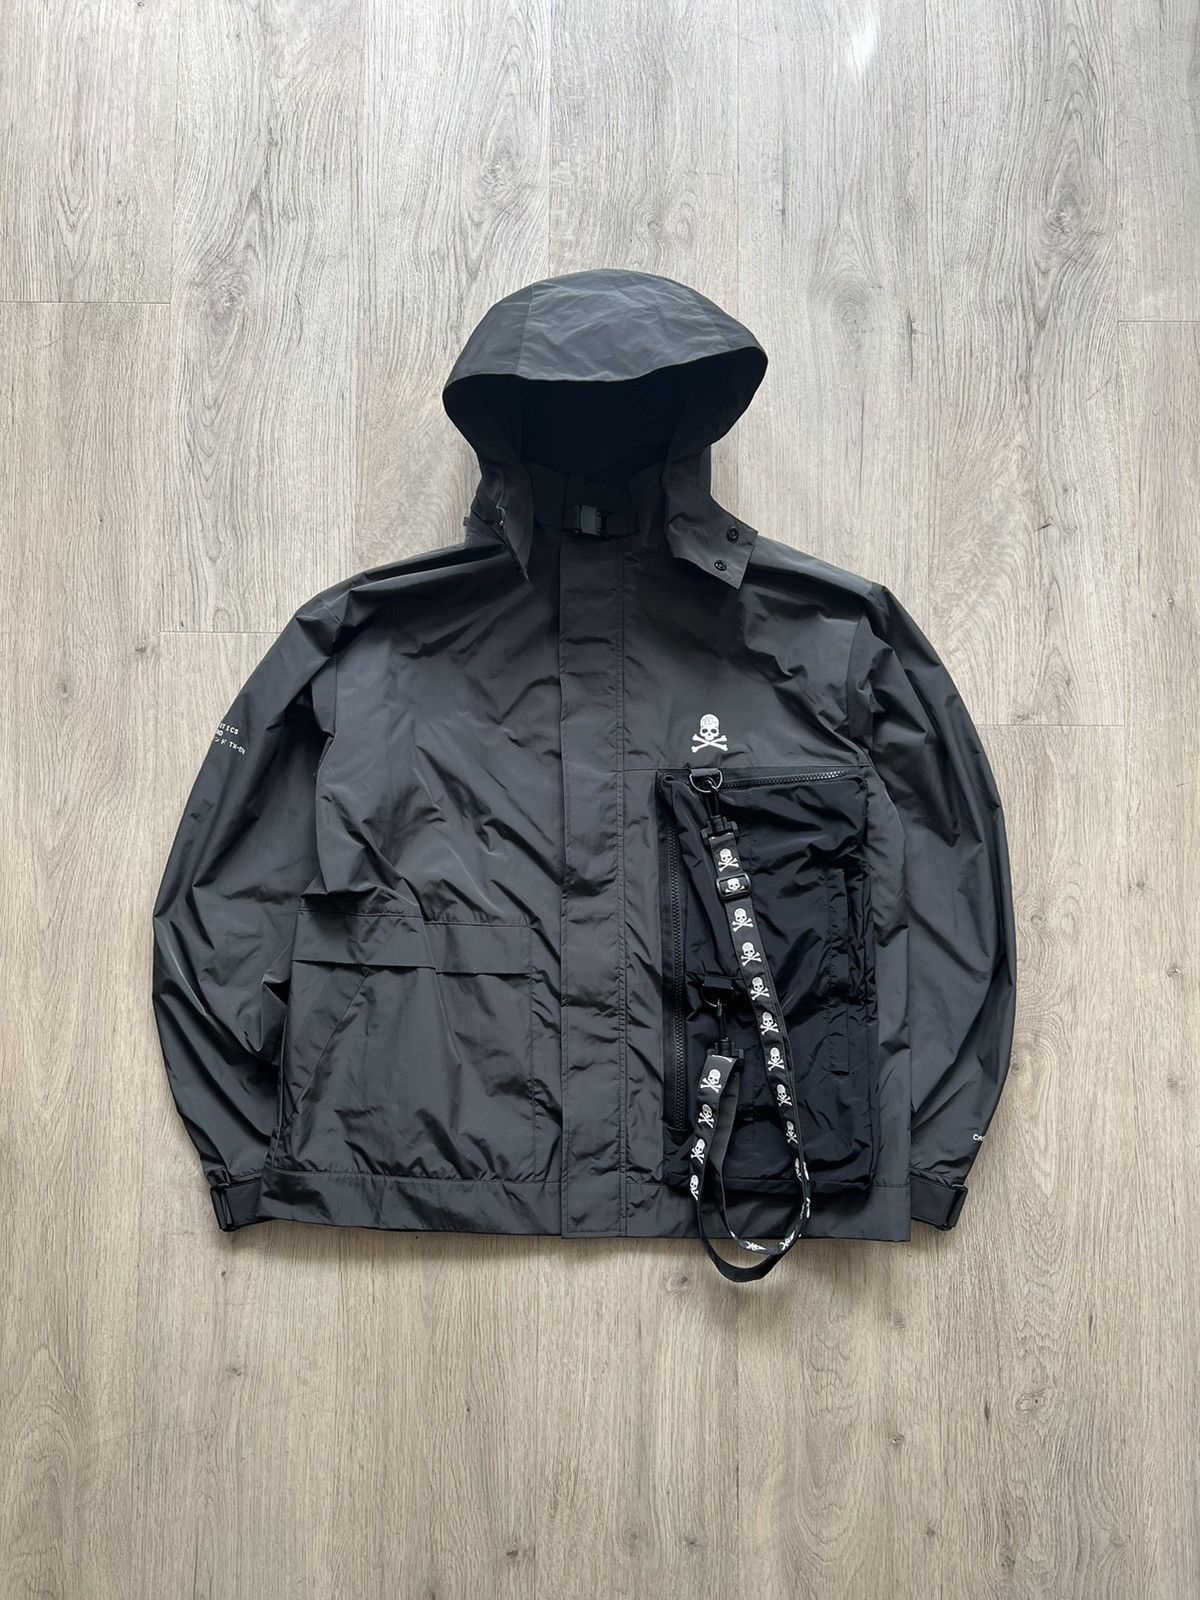 Mastermind Japan Mastermind Japan x C2H4 rain jacket | Grailed